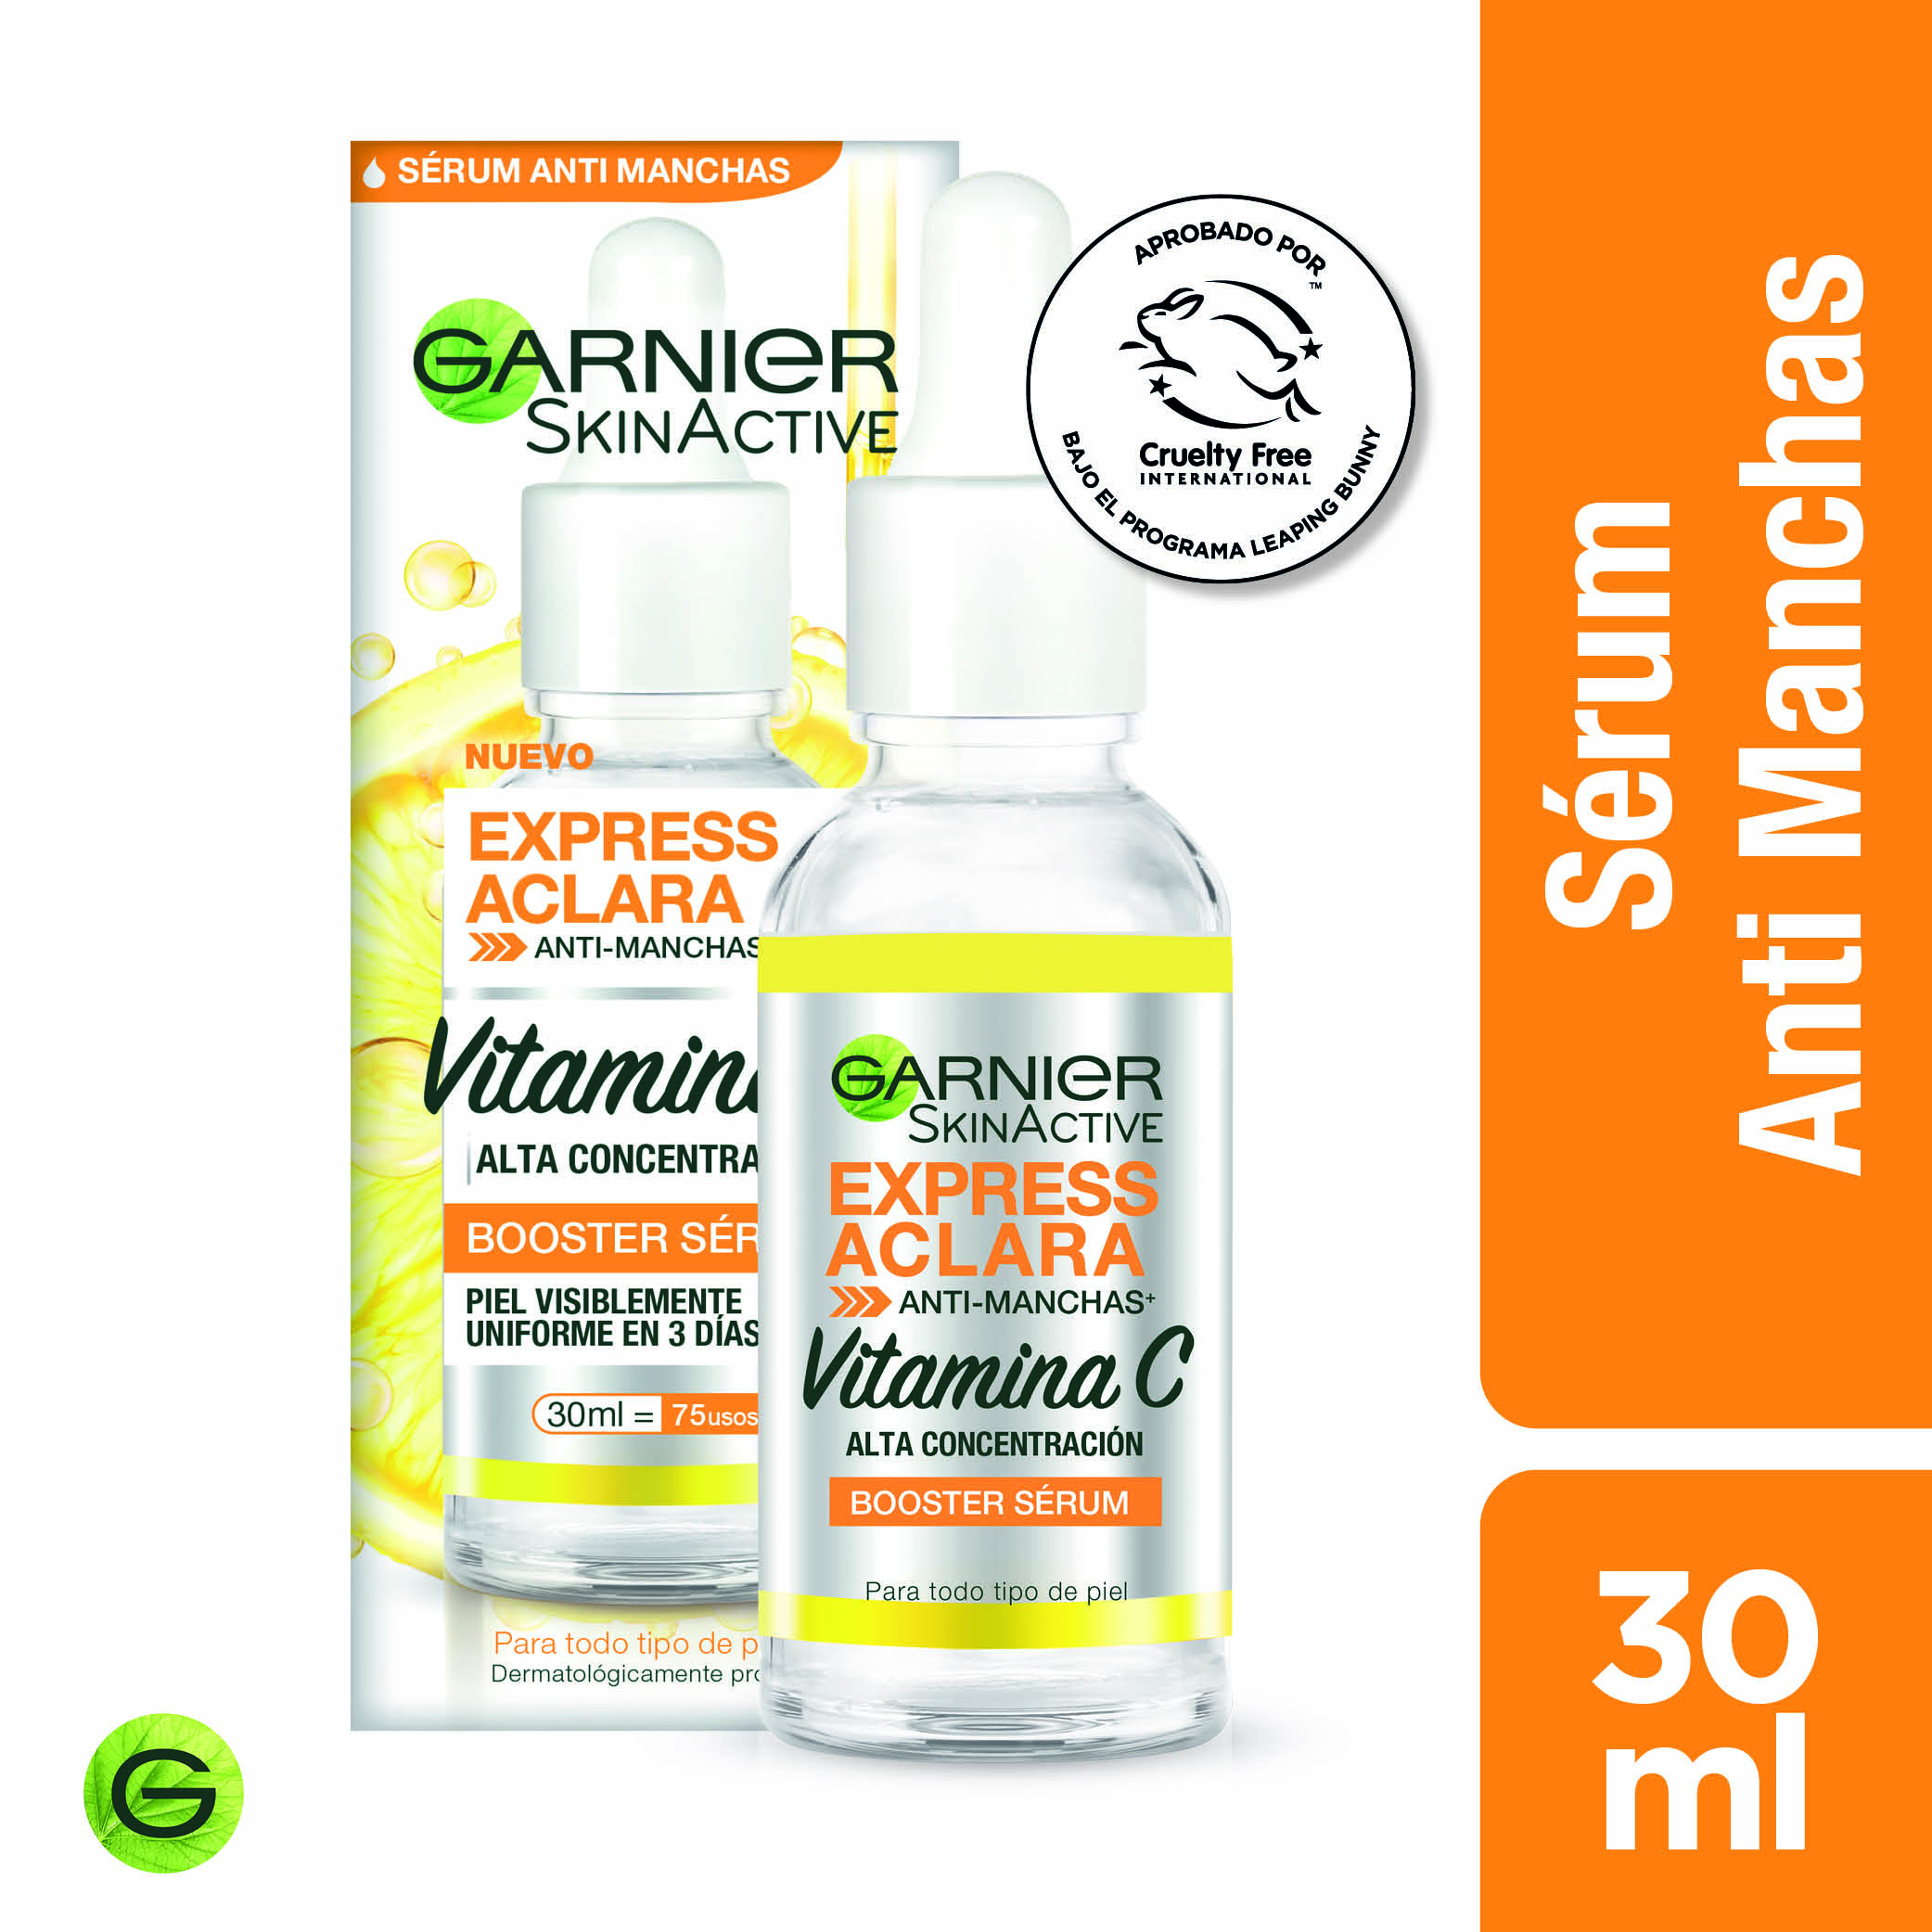 Garnier skin active serum express aclara (frasco 30 ml)